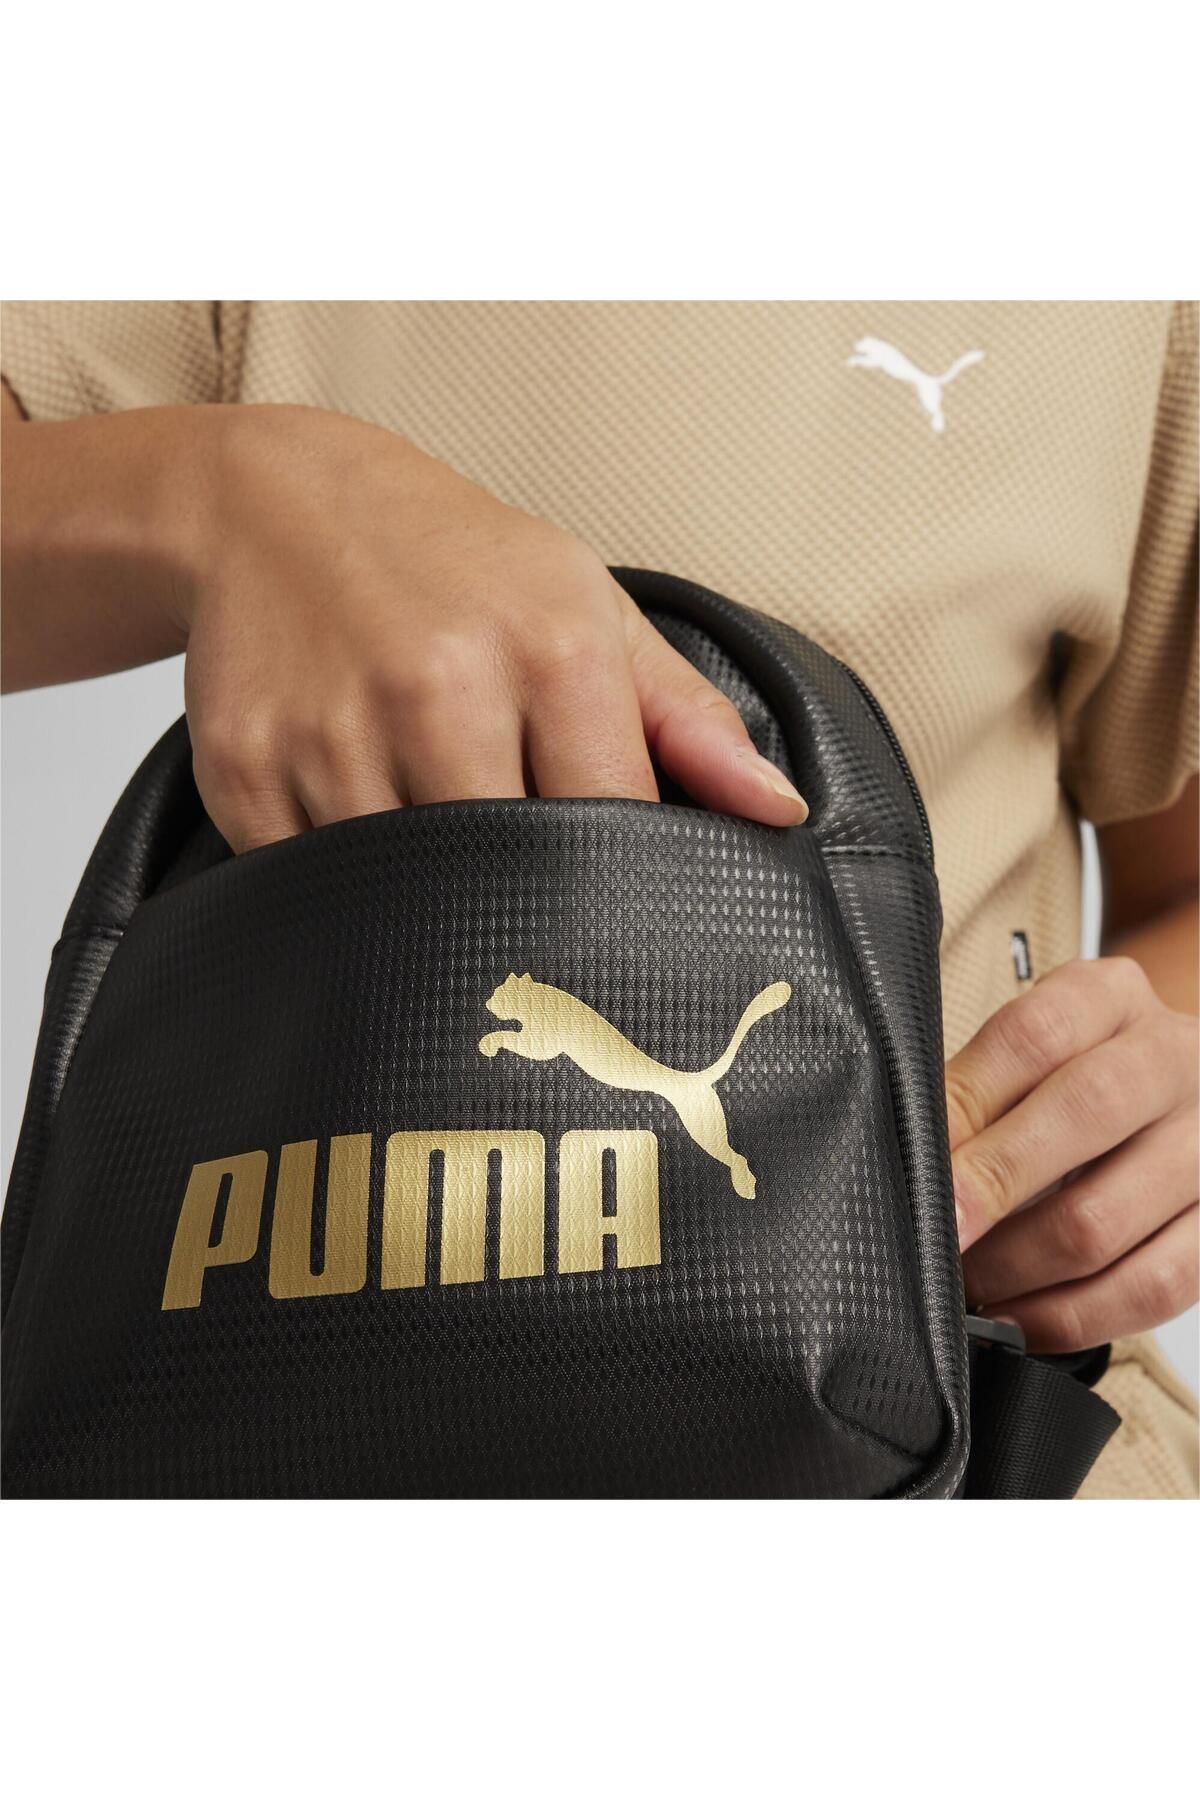 Puma کوله پشتی زنانه Minime Core Up